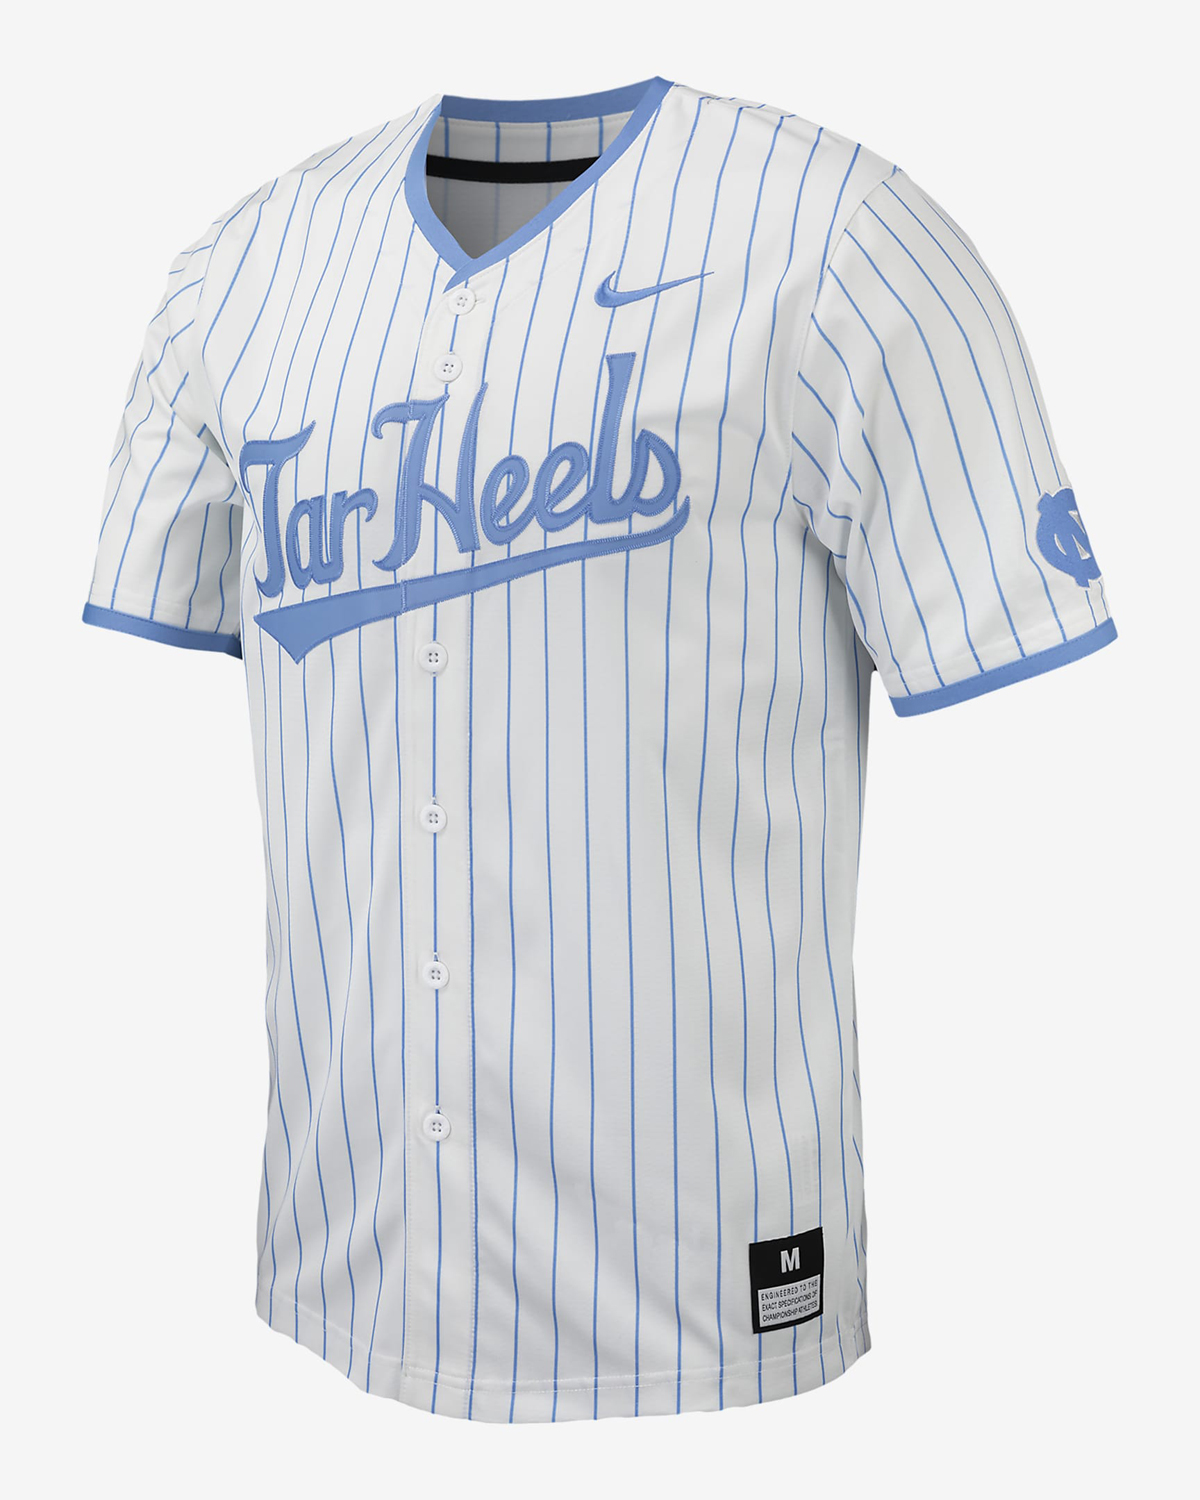 Nike-UNC-Baseball-Jersey-White-Valor-Blue